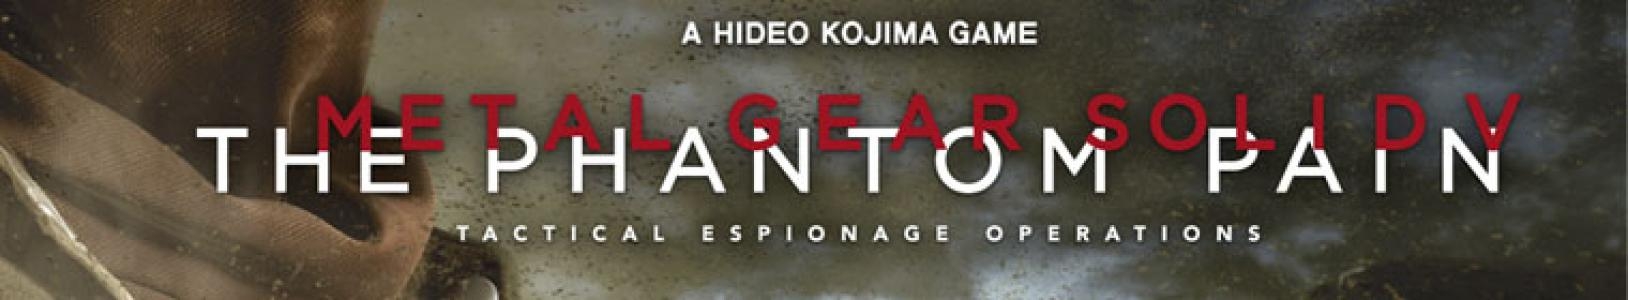 Metal Gear Solid V: The Phantom Pain banner